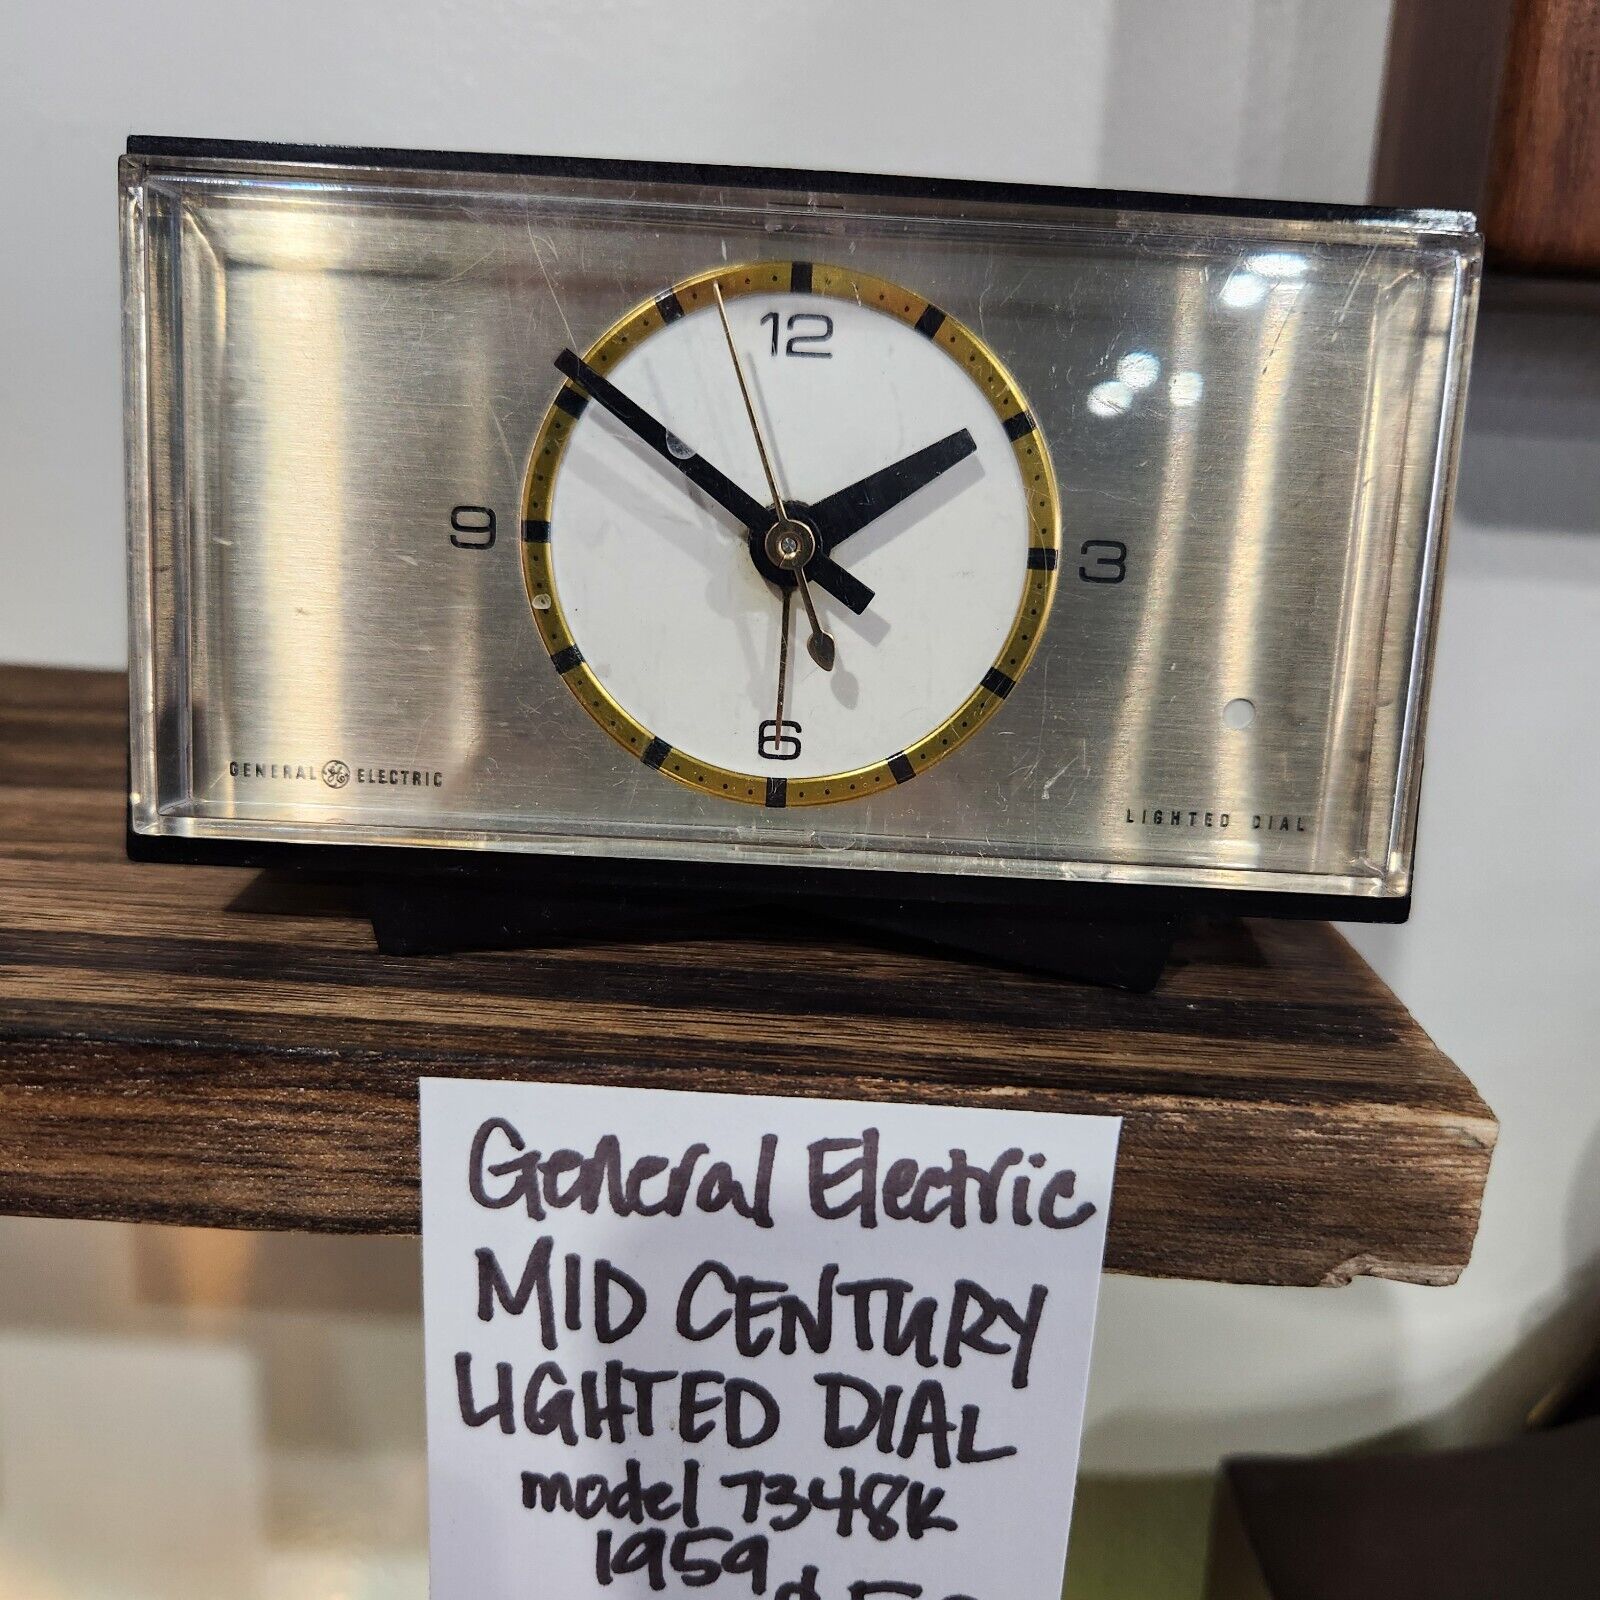 1959 GE MCM Alarm Clock model 7348K w/Lighted Dial - Professionally Refurbished